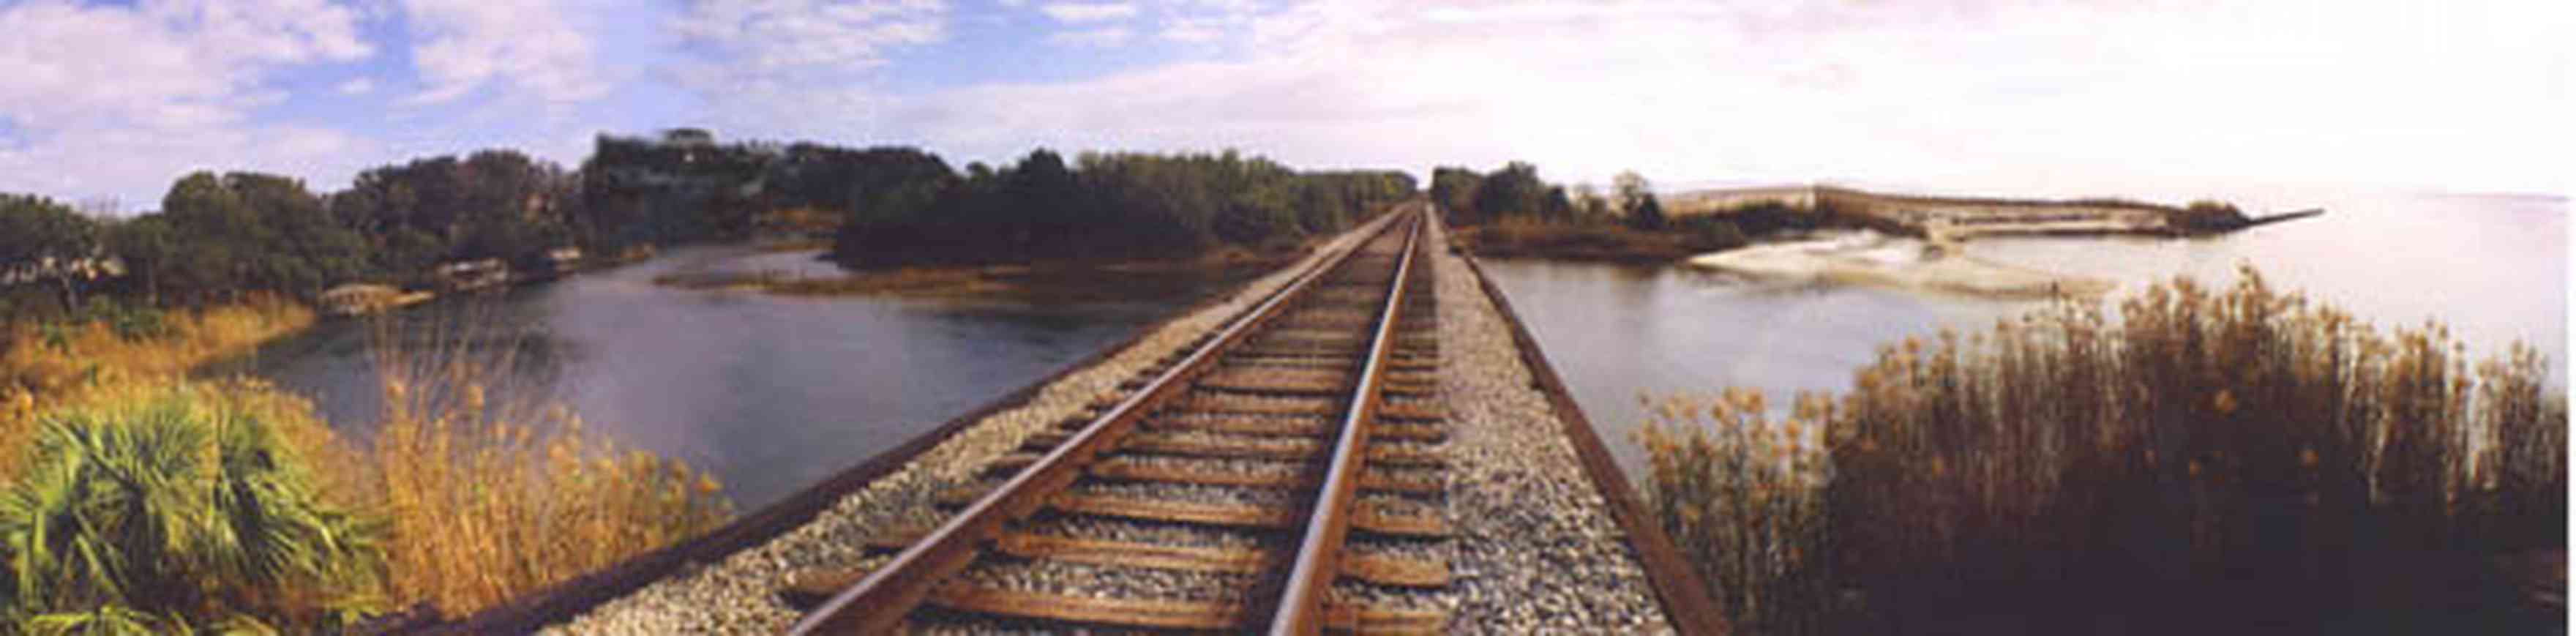 Pensacola:-Gateway-District:-Bayou-Texar-Railroad-Trestle_01.jpg:  csx railroad, train tracks, bayou texar, spoil island